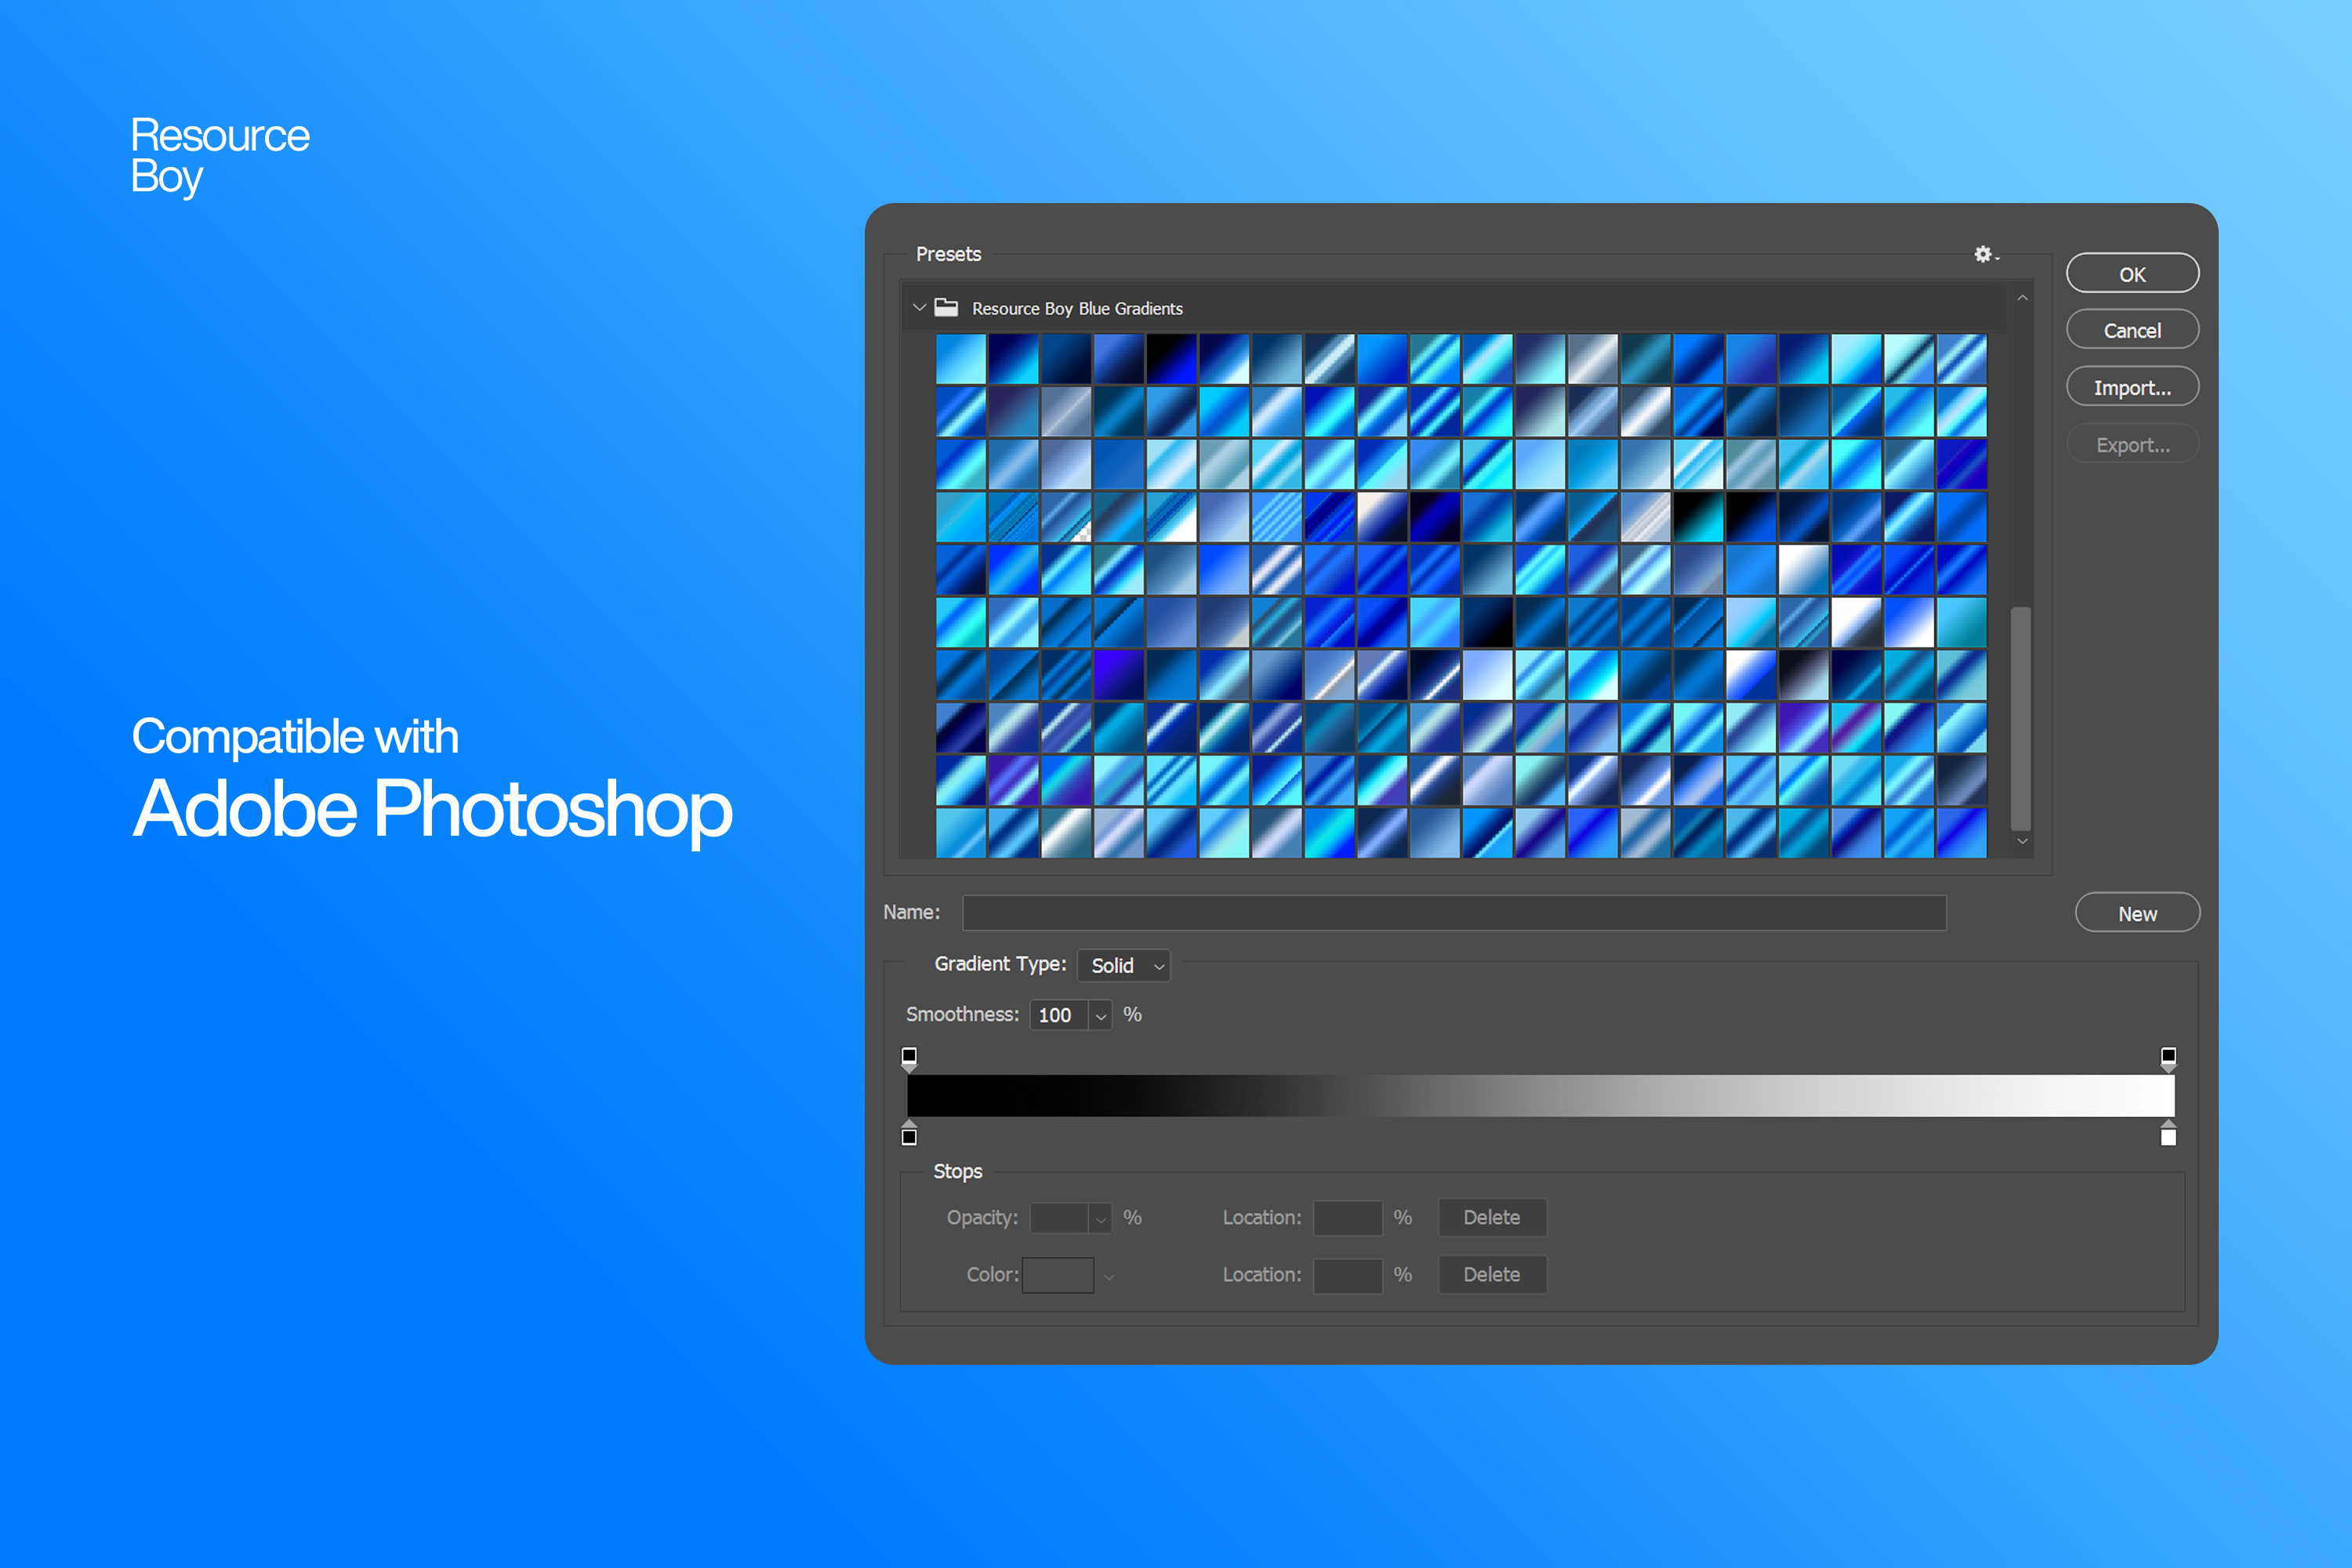 200 Free Blue Photoshop Gradients